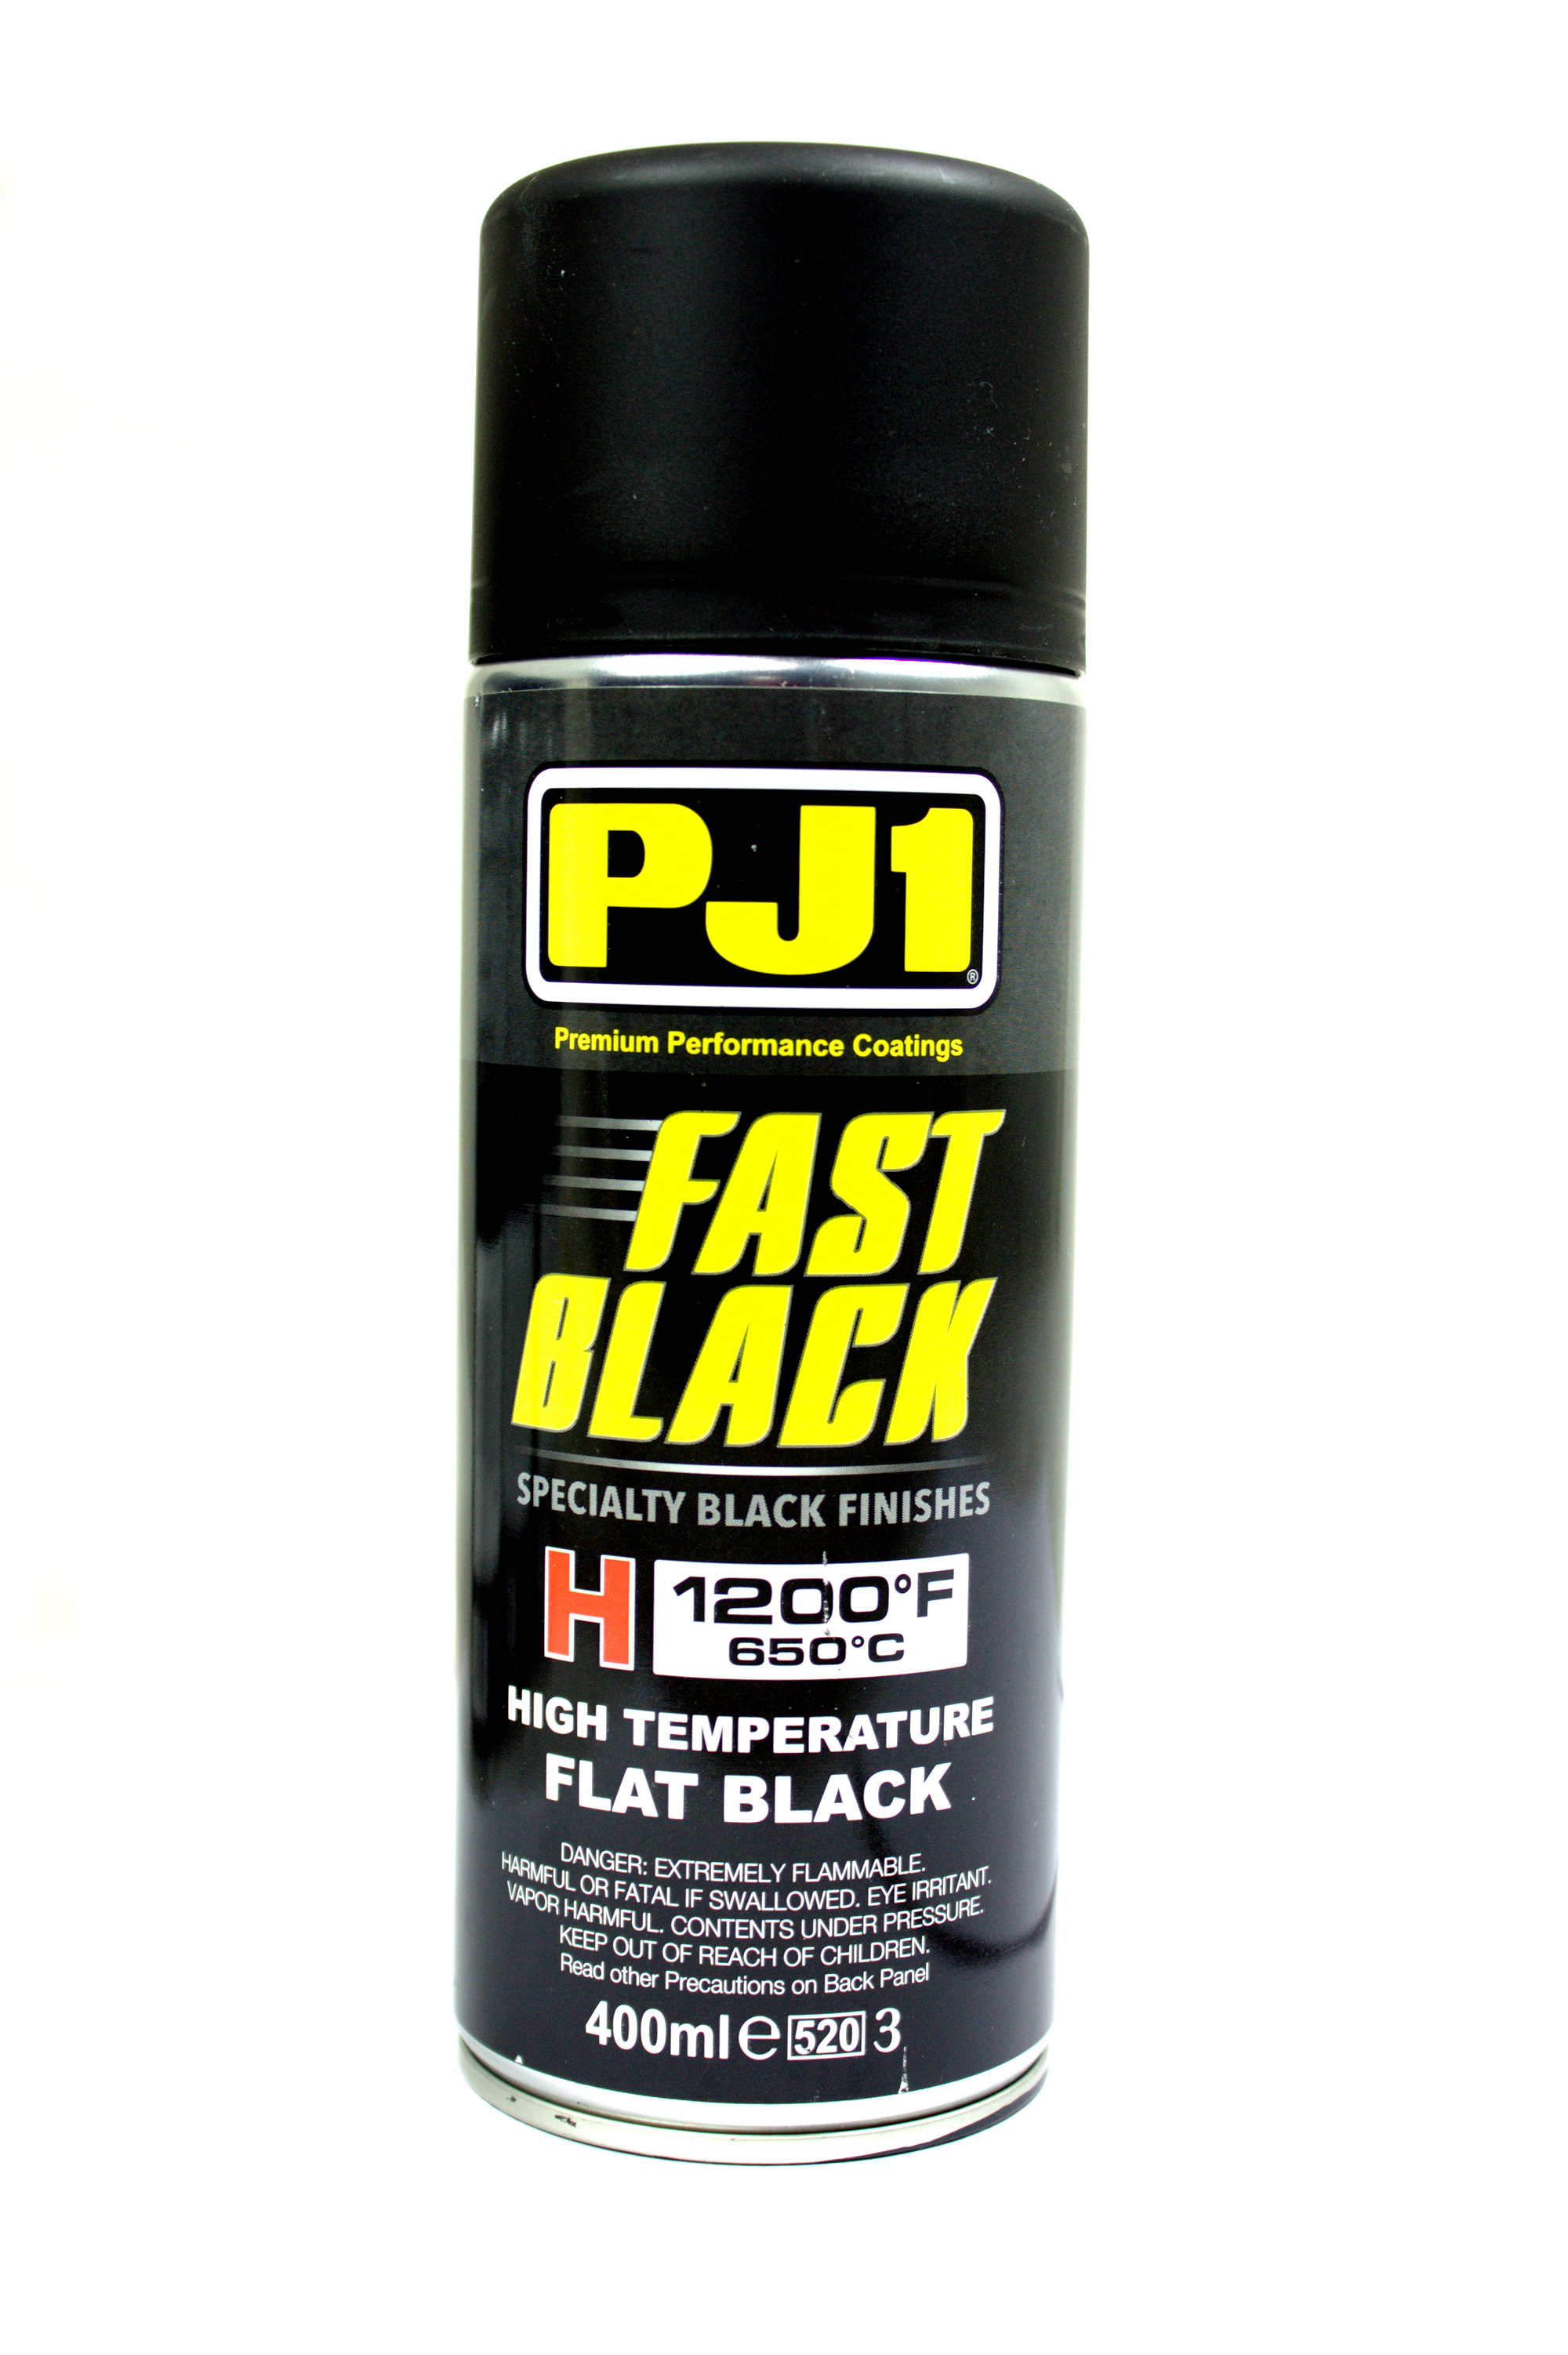 PJ1 Fast Black High Temp Exhaust Paint 0753426